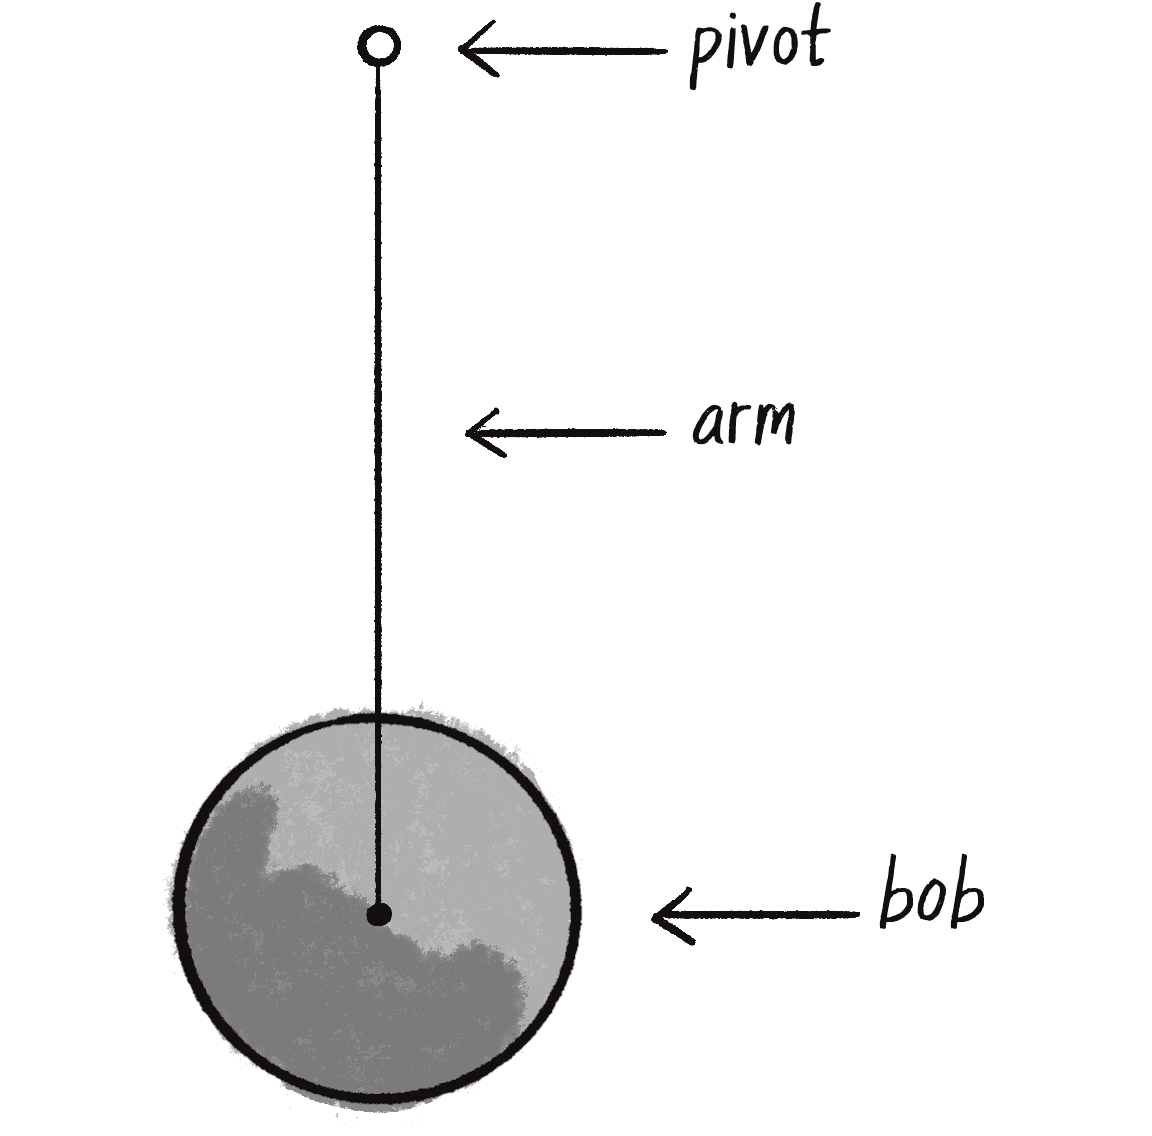 Figure 3.18: A pendulum with a pivot, arm, and bob